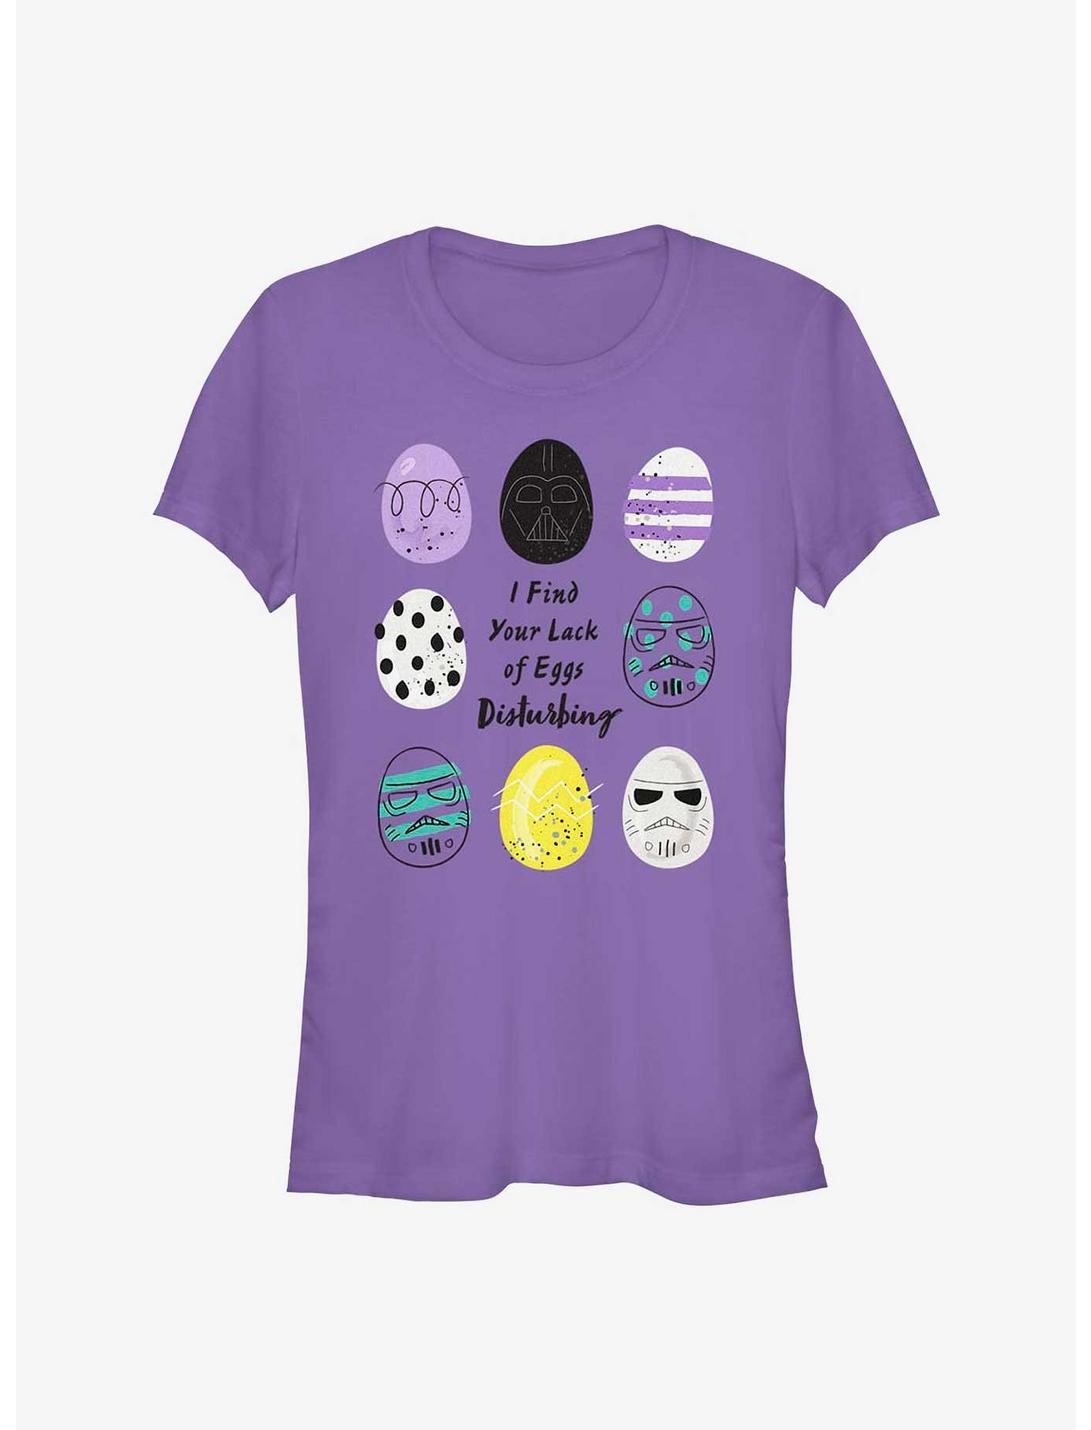 Star Wars Lack of Easter Eggs Disturbing Girls T-Shirt, PURPLE, hi-res